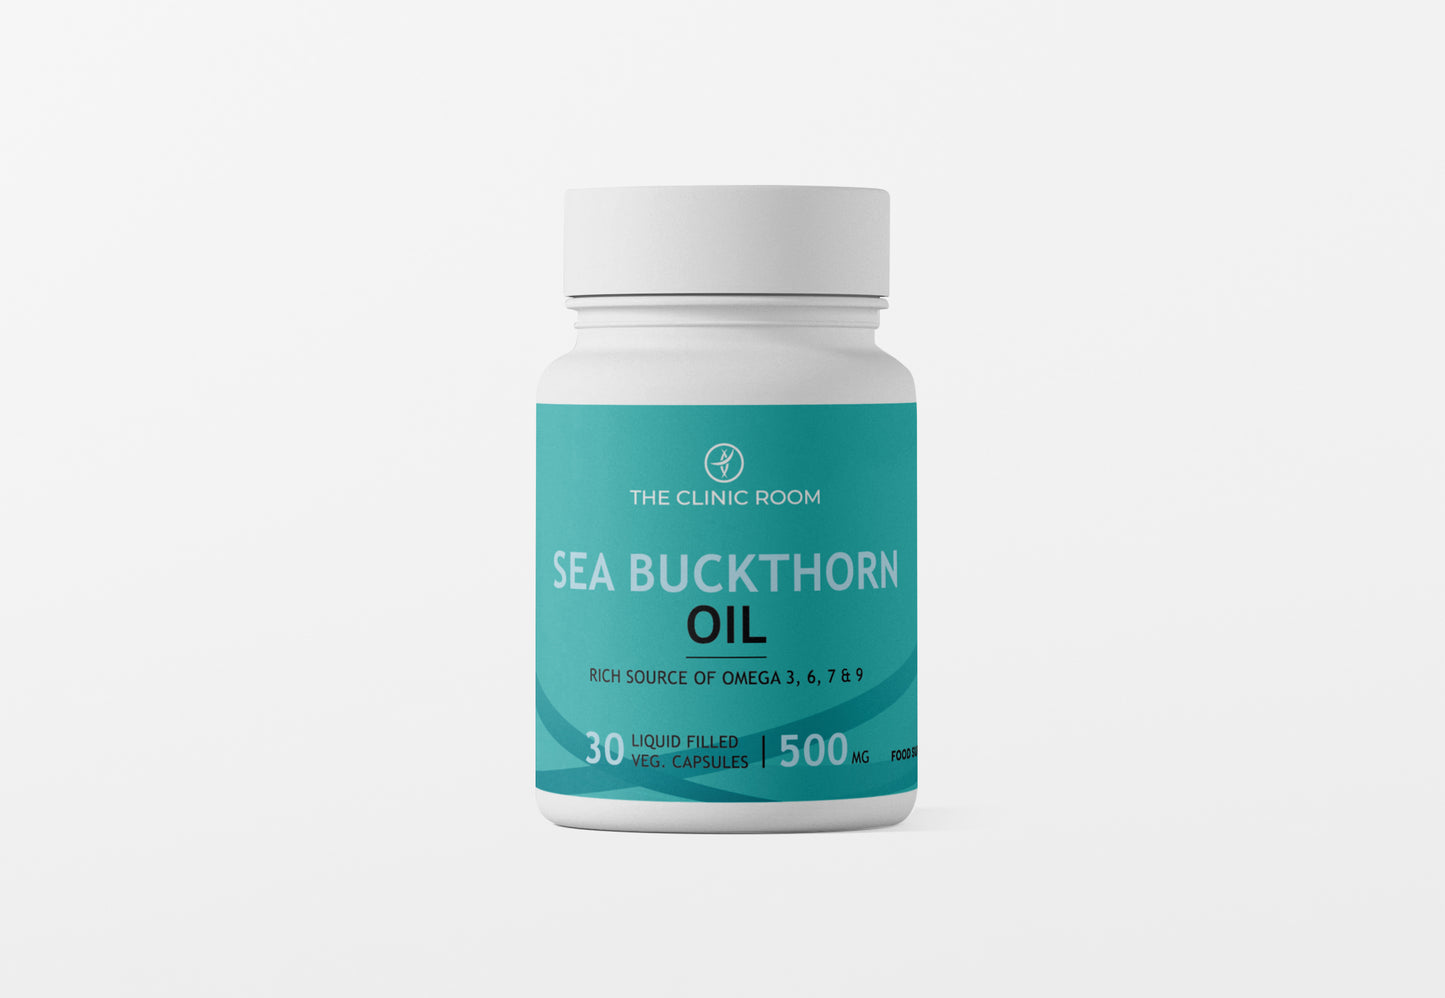 Sea Buckthorn oil